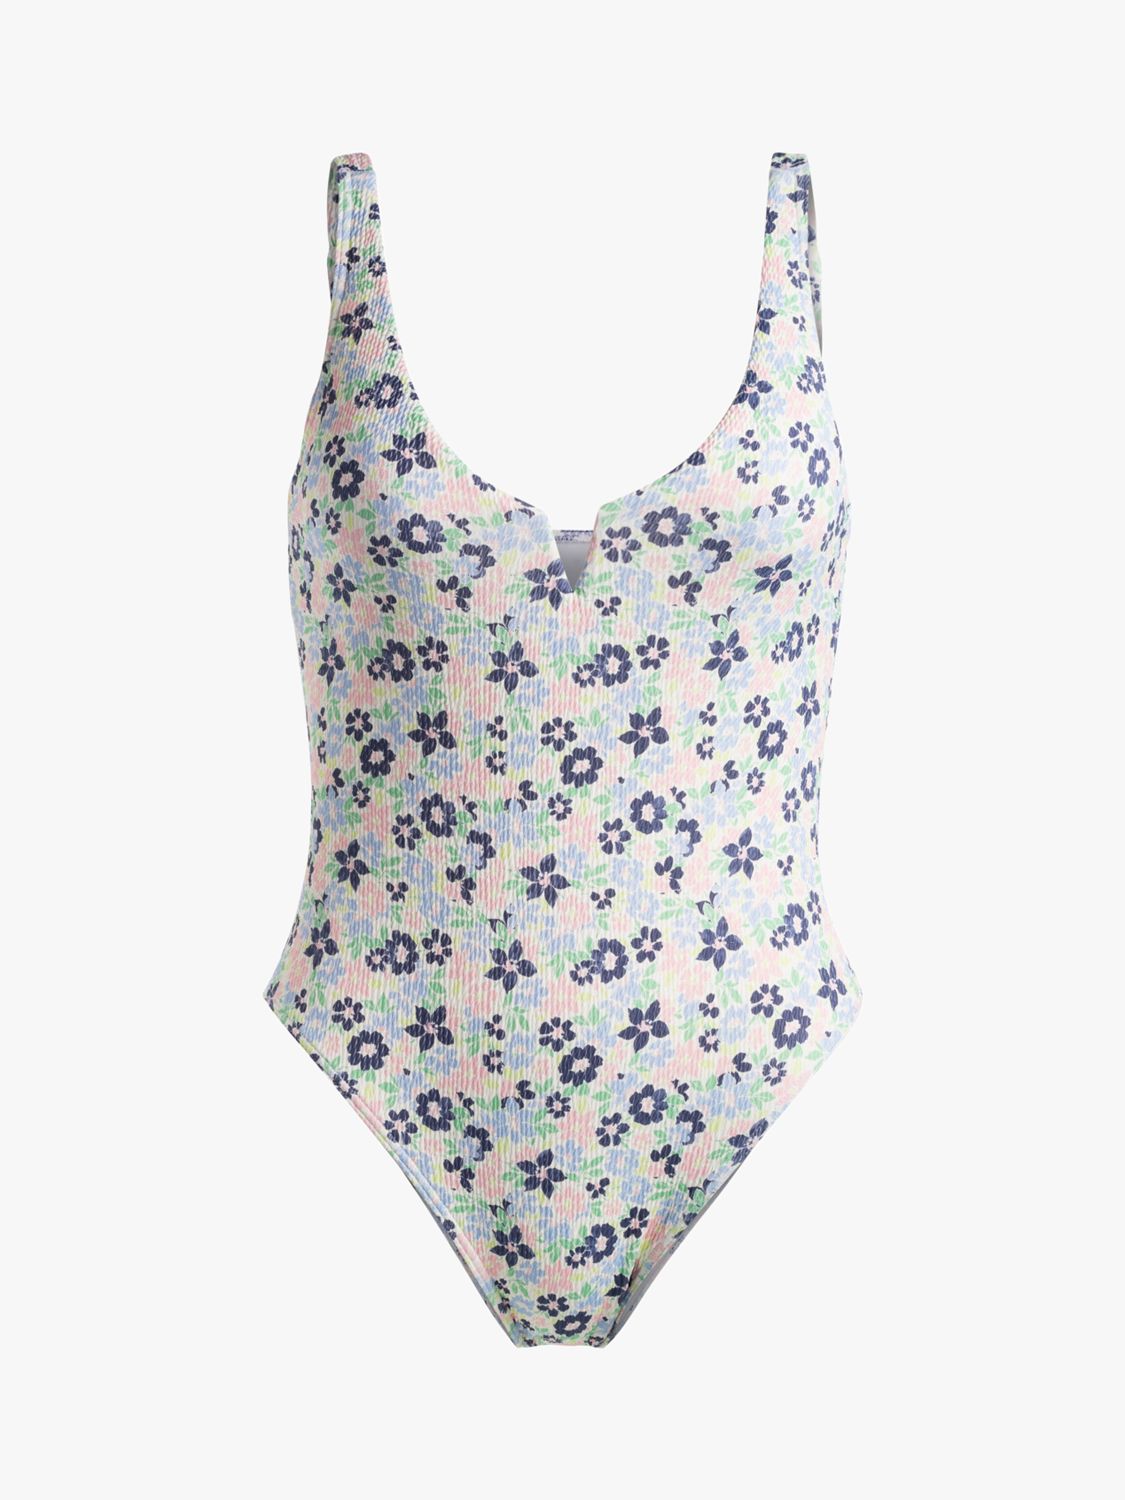 Roxy Bel Air Floral Print Swimsuit, Multi, XL